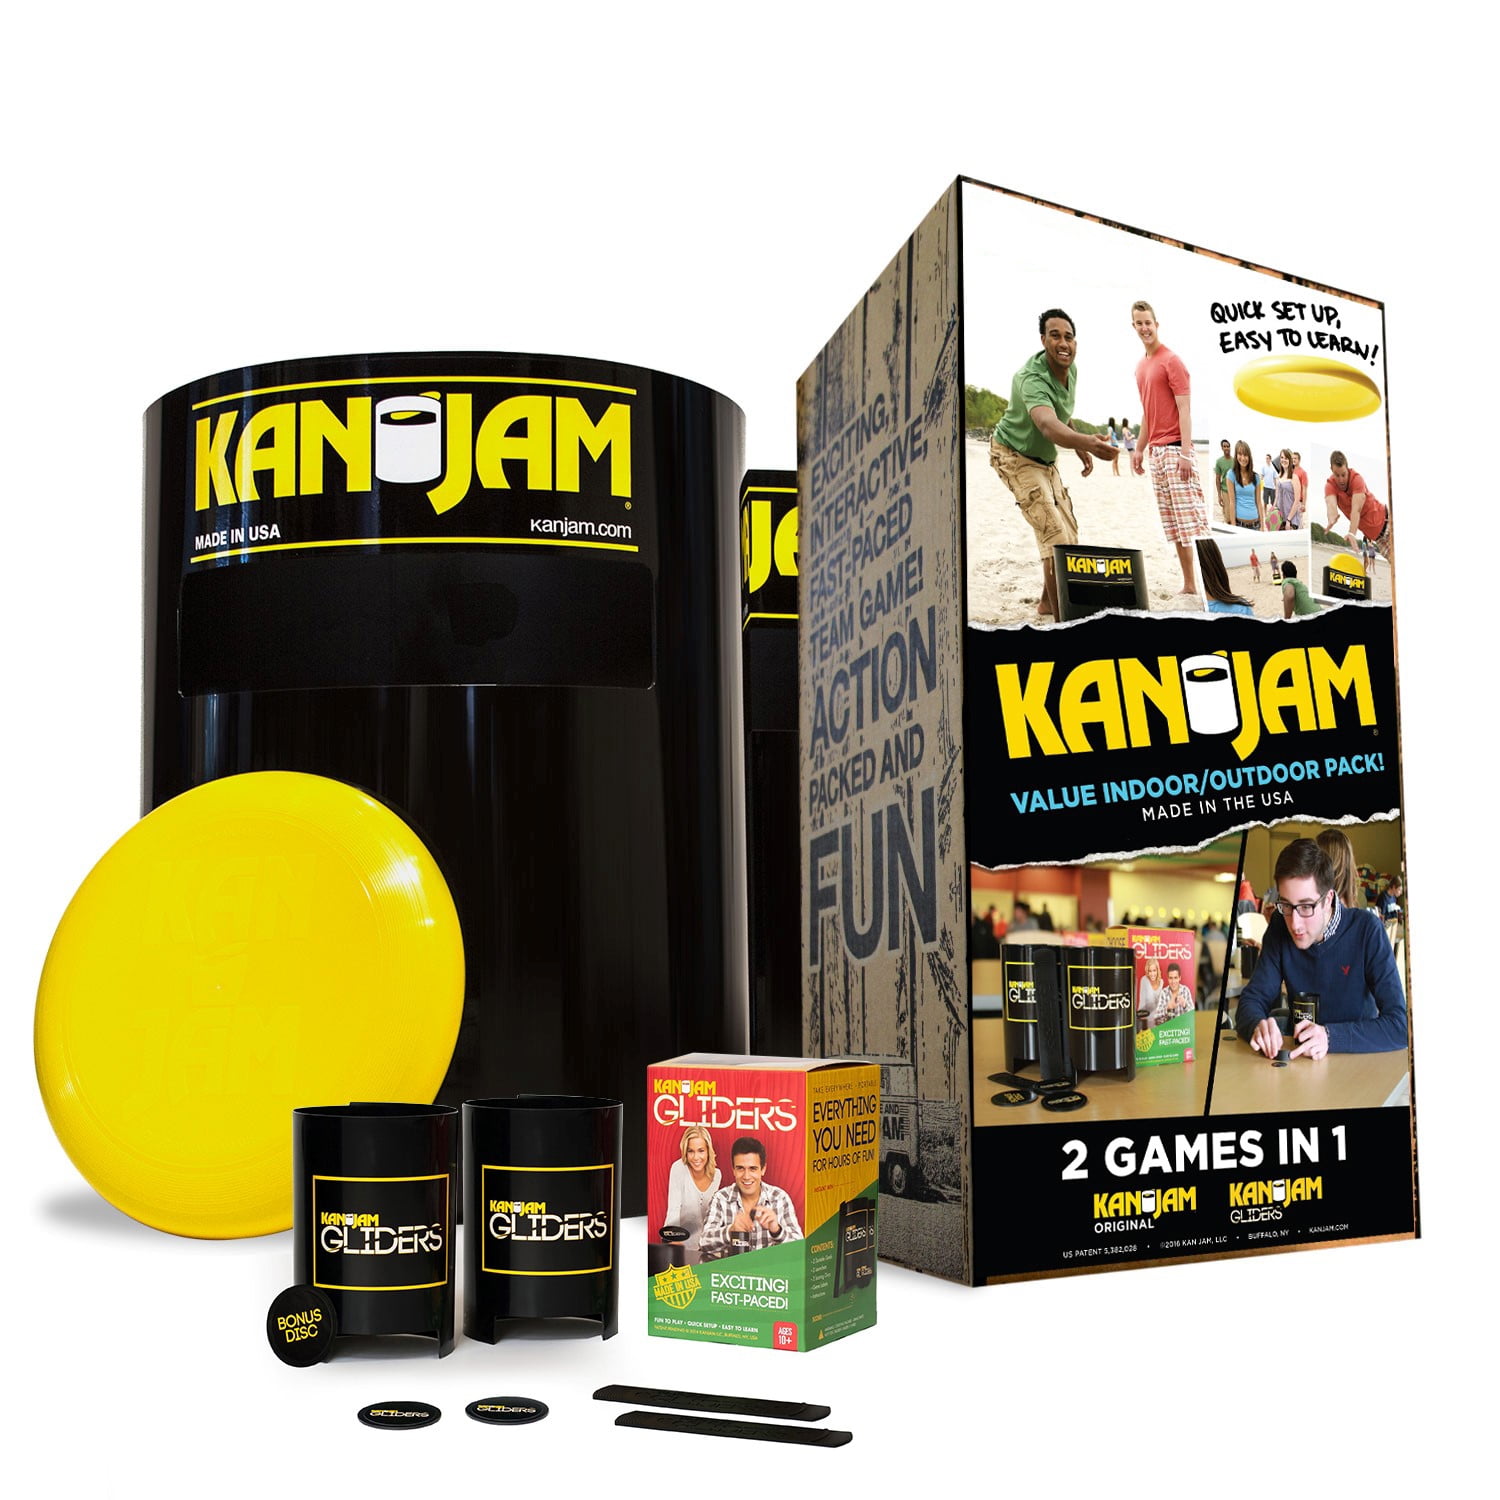 Can Kan Jam Outdoor Mini Disc Game Family Portable Fun Event Sports Good 